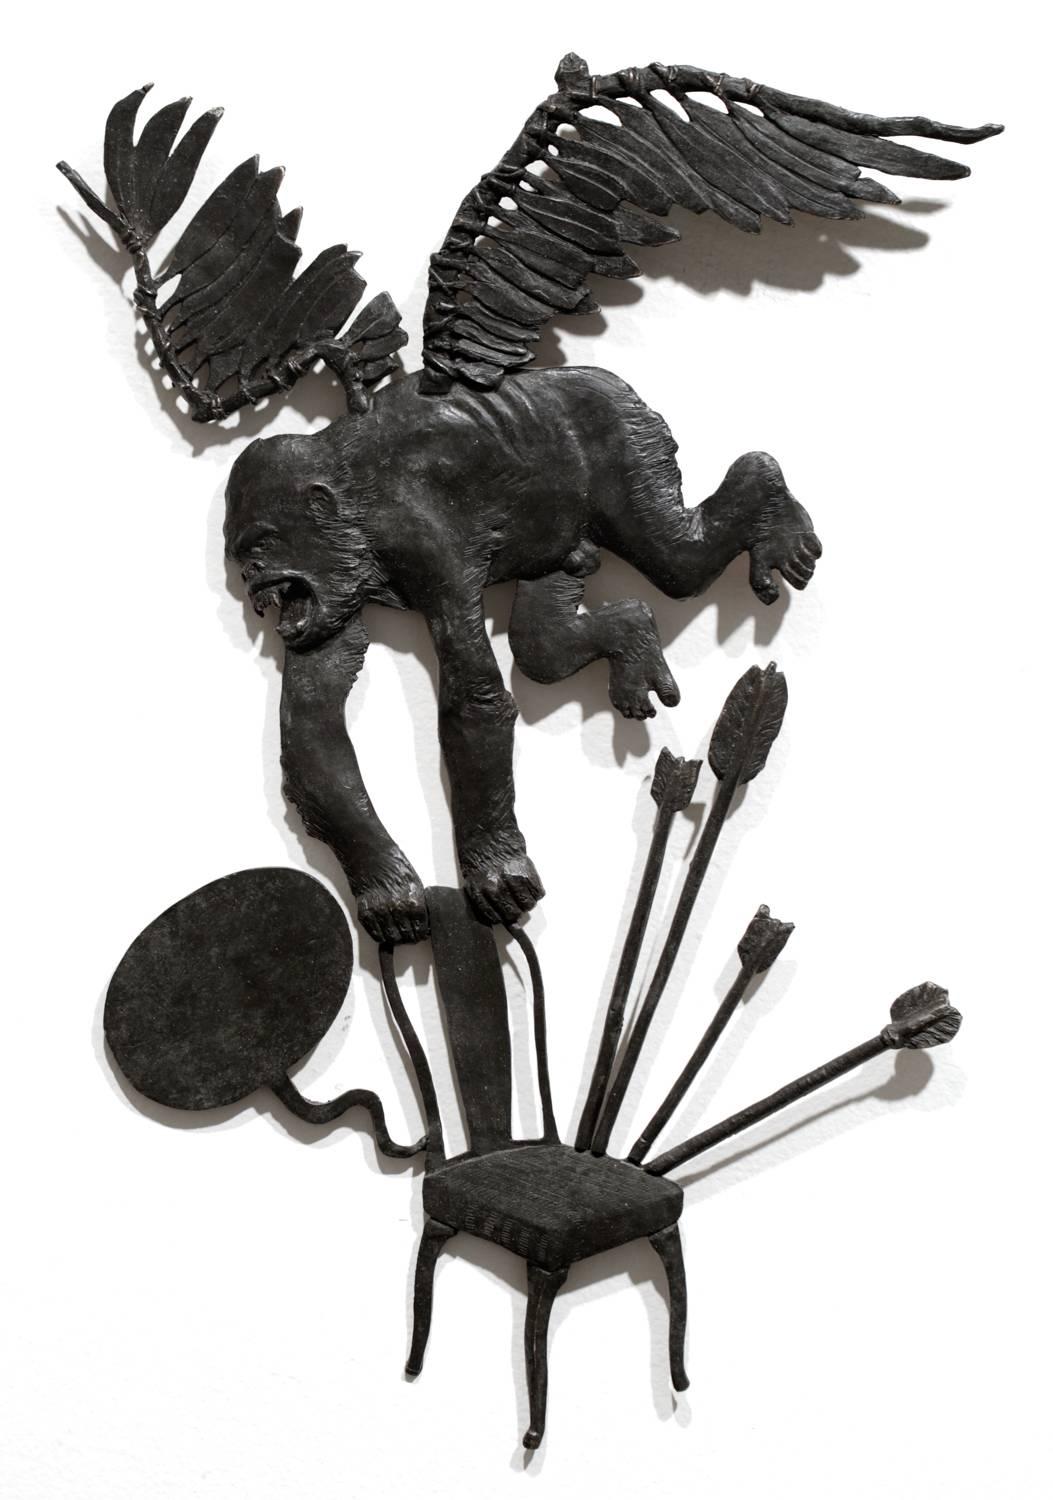 Jedediah Morfit Figurative Sculpture - "Interrogation" Bronze sculpture